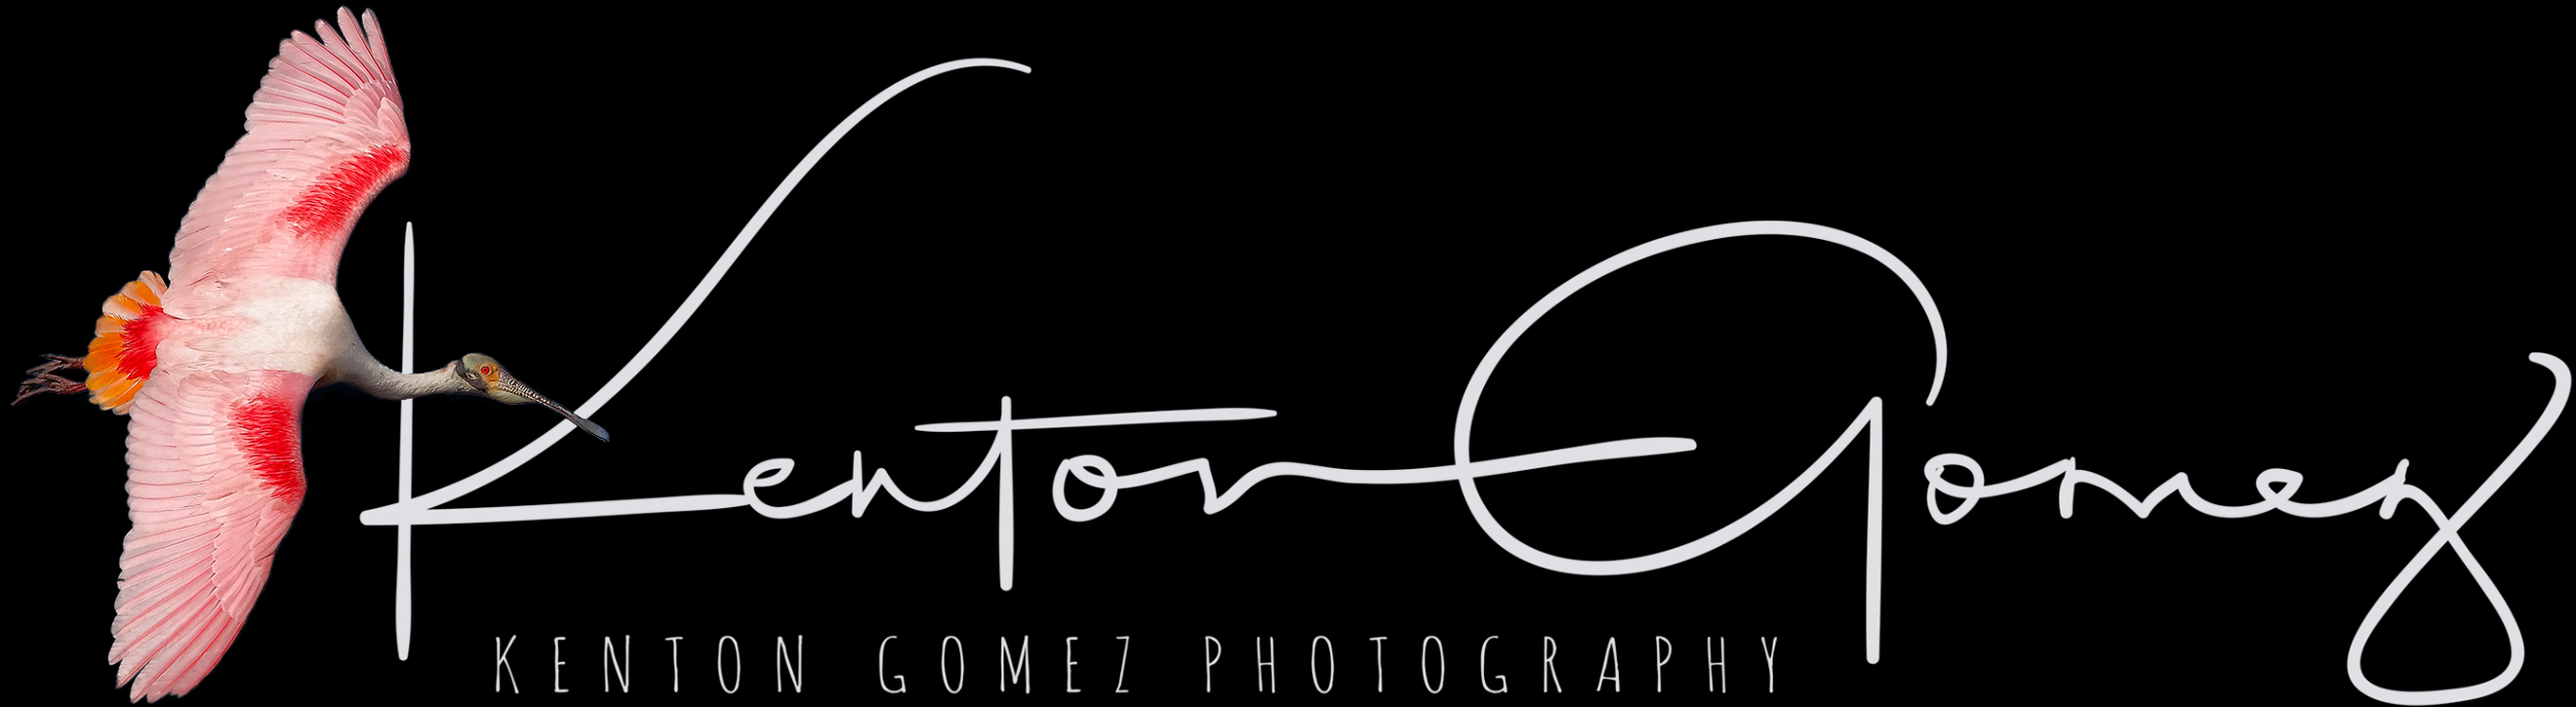 Kenton Gomez Photography 